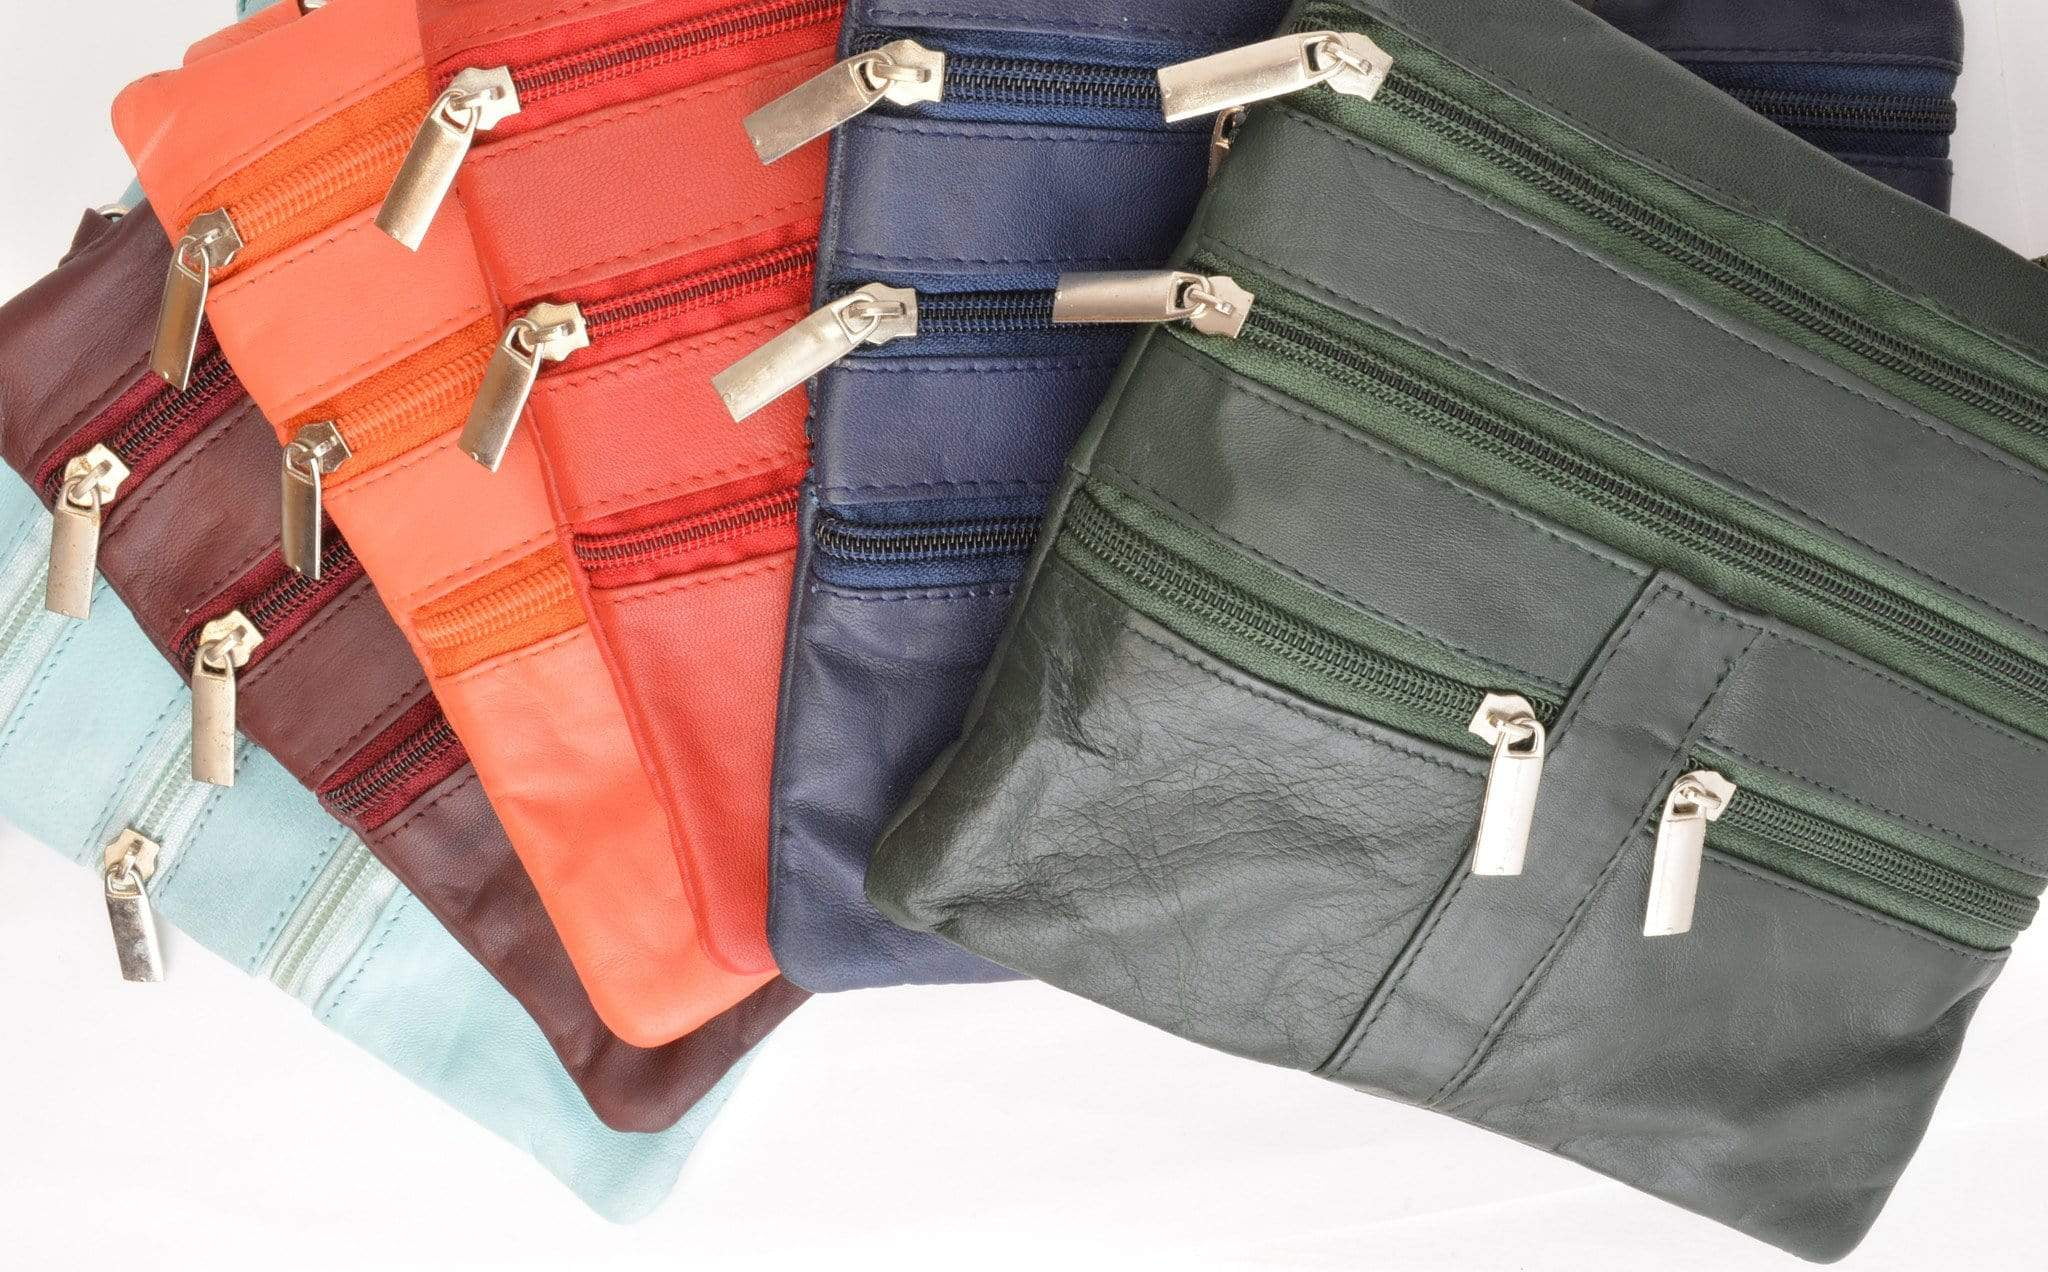 Genuine Soft Leather Cross Body Bag Purse Shoulder Bag 5 Pocket Organizer Micro Handbag Travel Wallet Many Colors 1eafae89 4b52 4a72 a511 8594b25b399e.599c3c76e8ff8a522180336f79ffa059